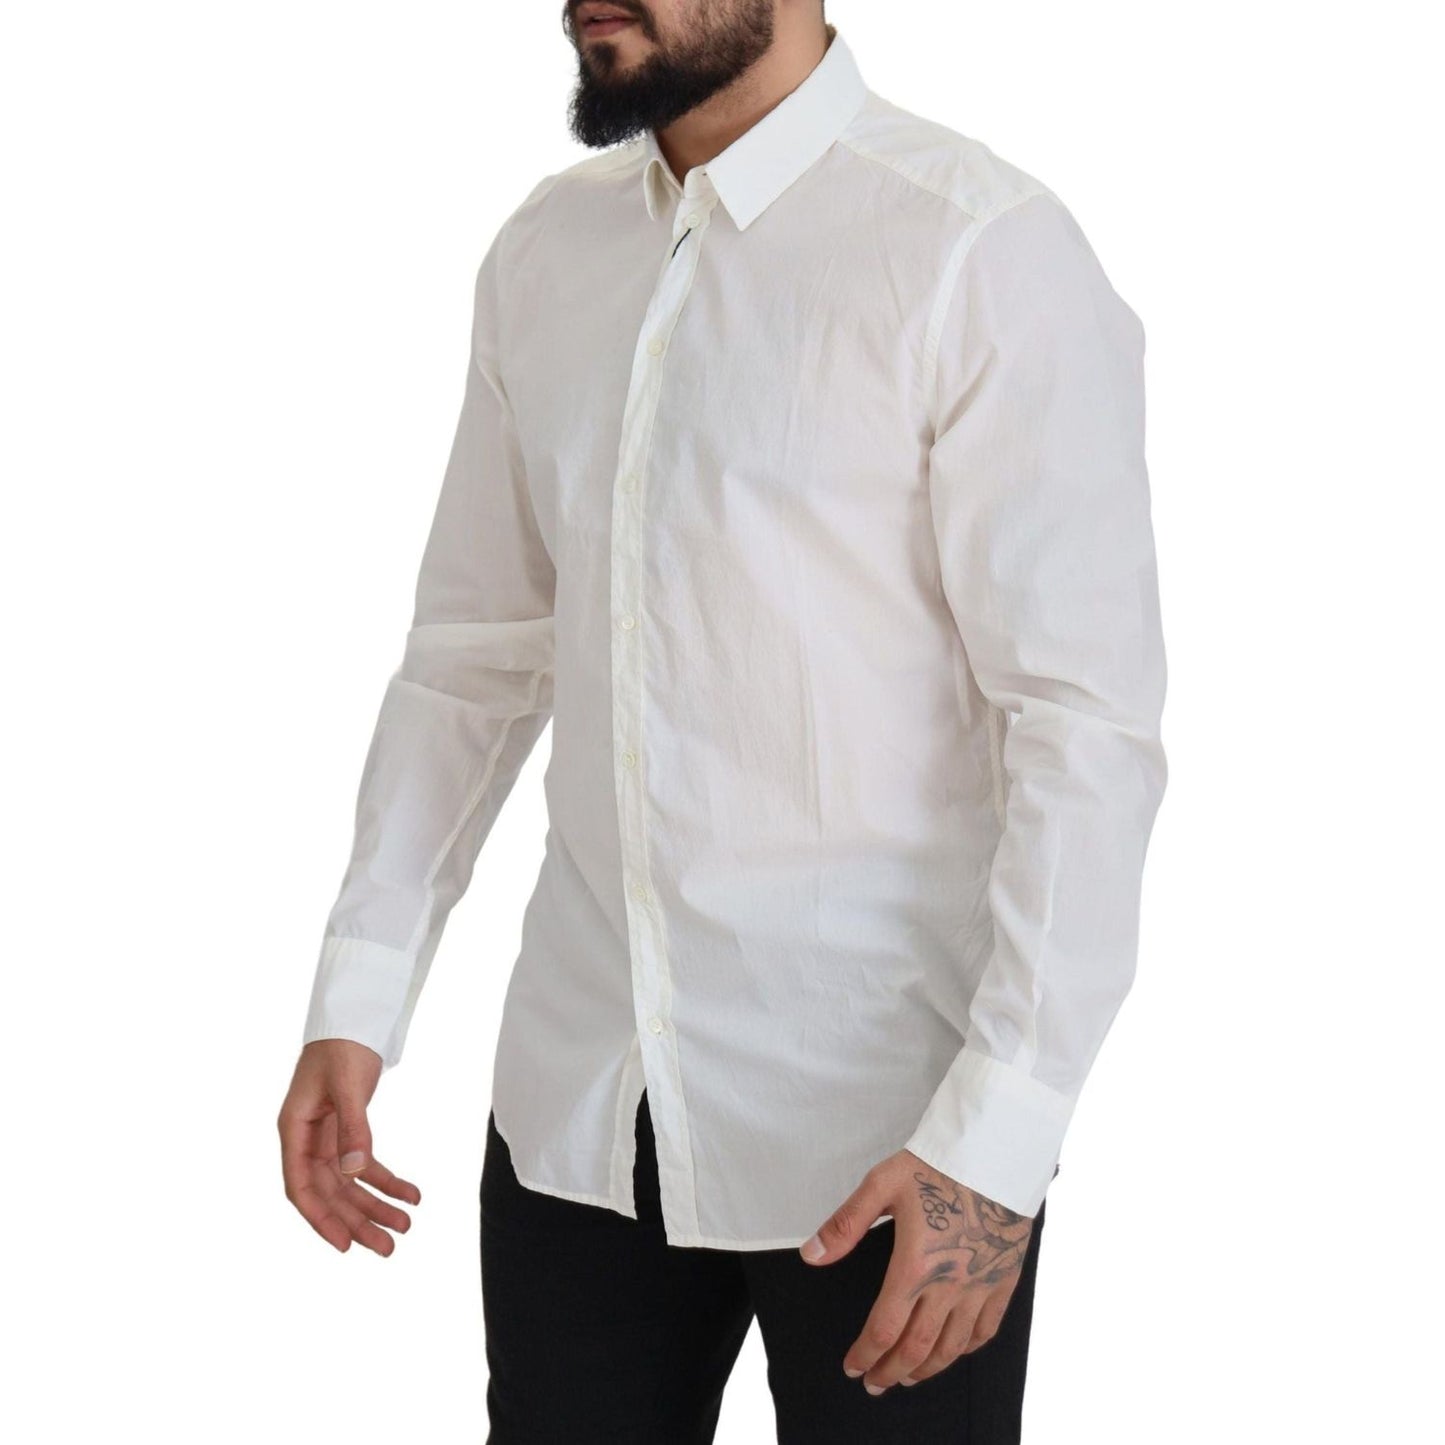 Dolce & Gabbana Elegant Slim Fit Dress Shirt white-cotton-slim-fit-dress-shirt IMG_8069-scaled-24129460-d6e.jpg